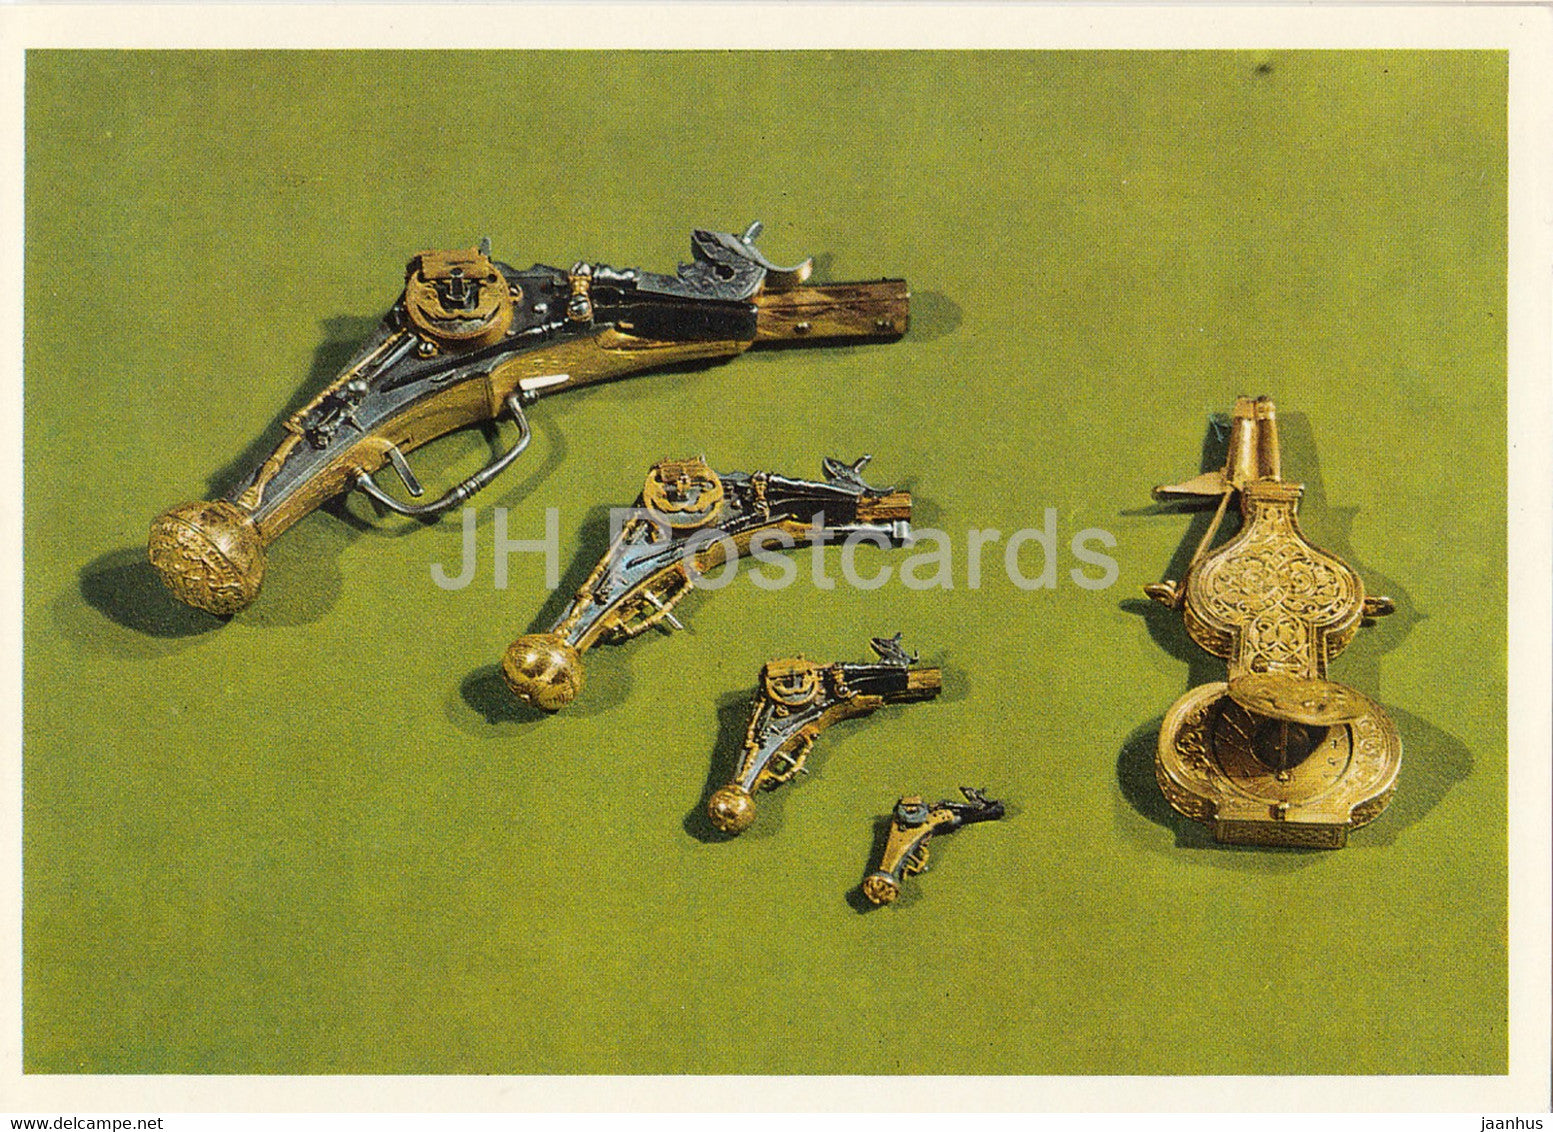 Miniaturpistolen Kugelzangen - Pulverflasche mit Kompass - miniature pistols - compass - Germany - unused - JH Postcards